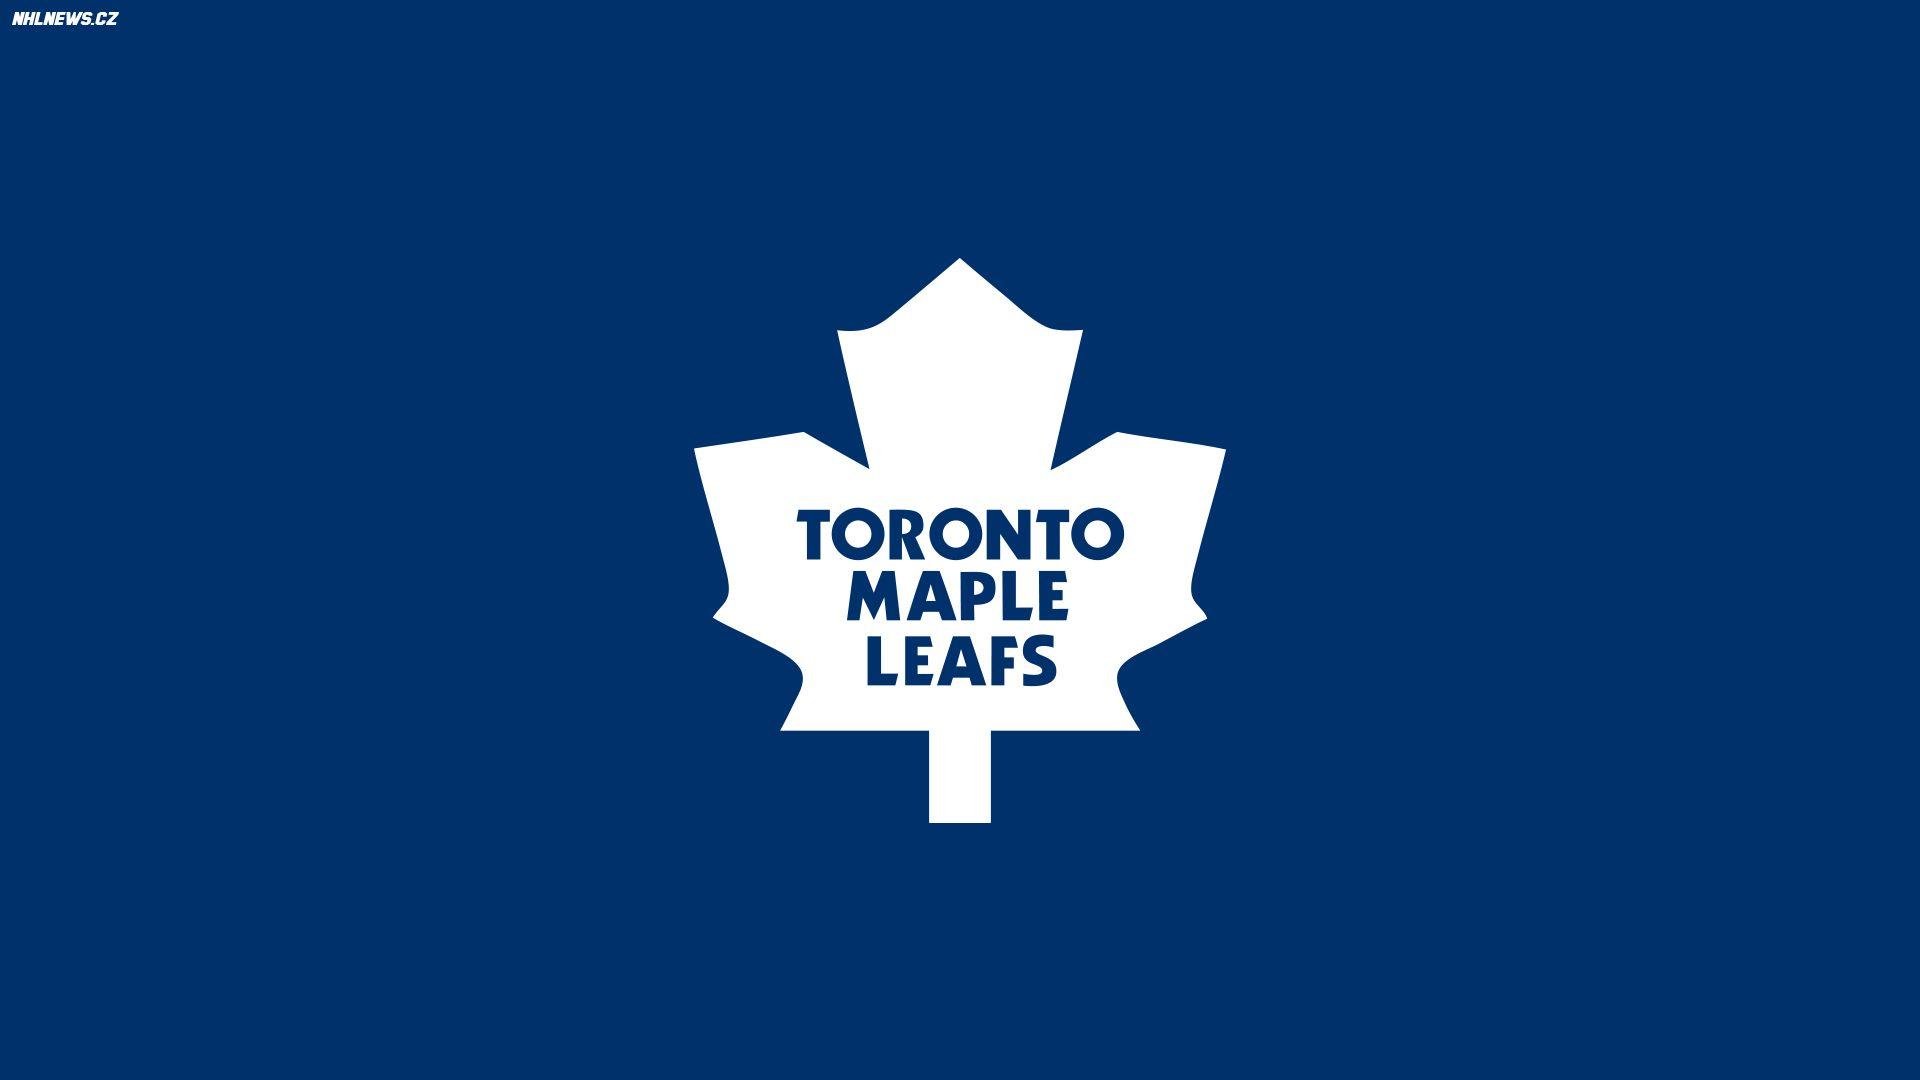 Toronto Maple Leafs. Full HD Widescreen wallpaper